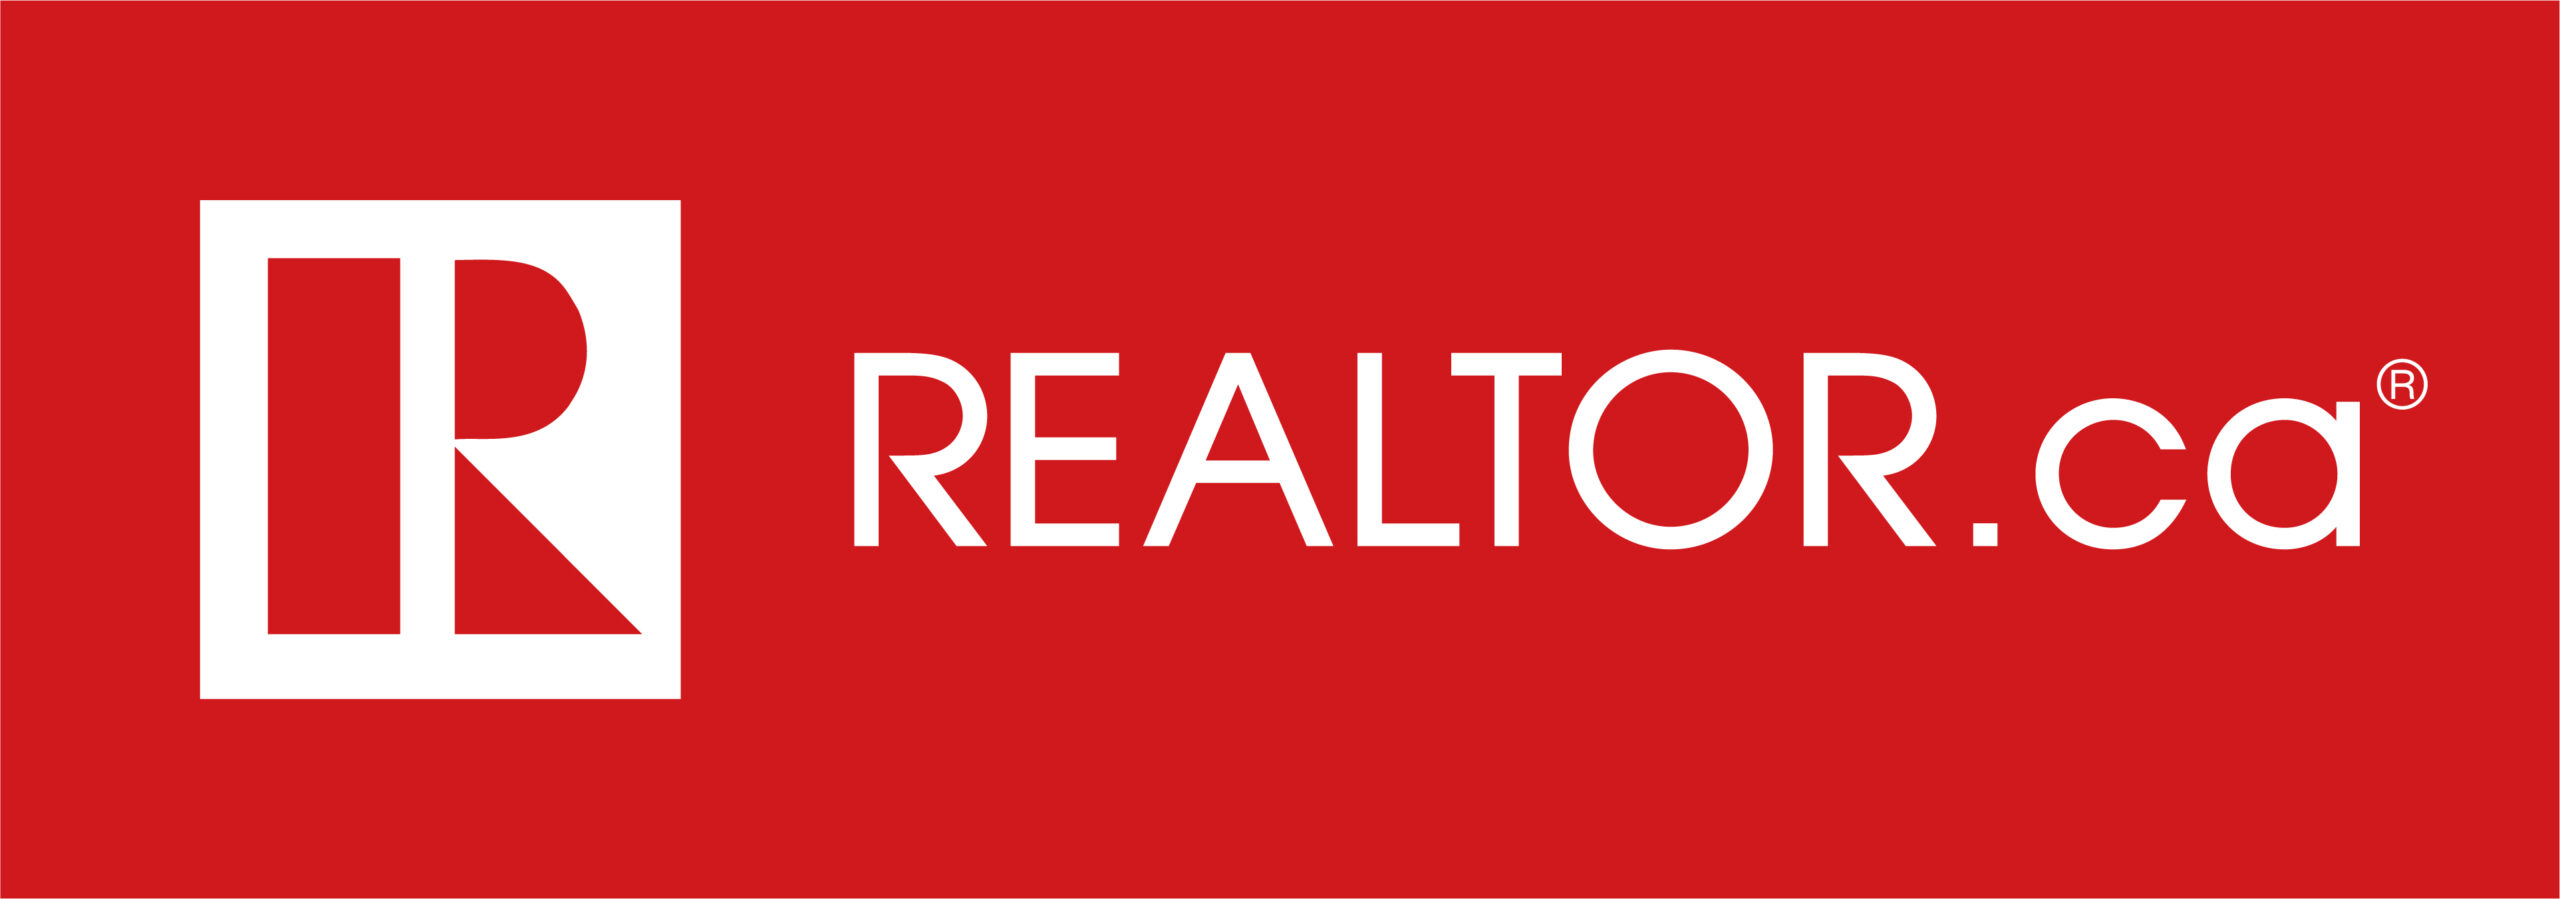 REALTORca-logo-full-rgb